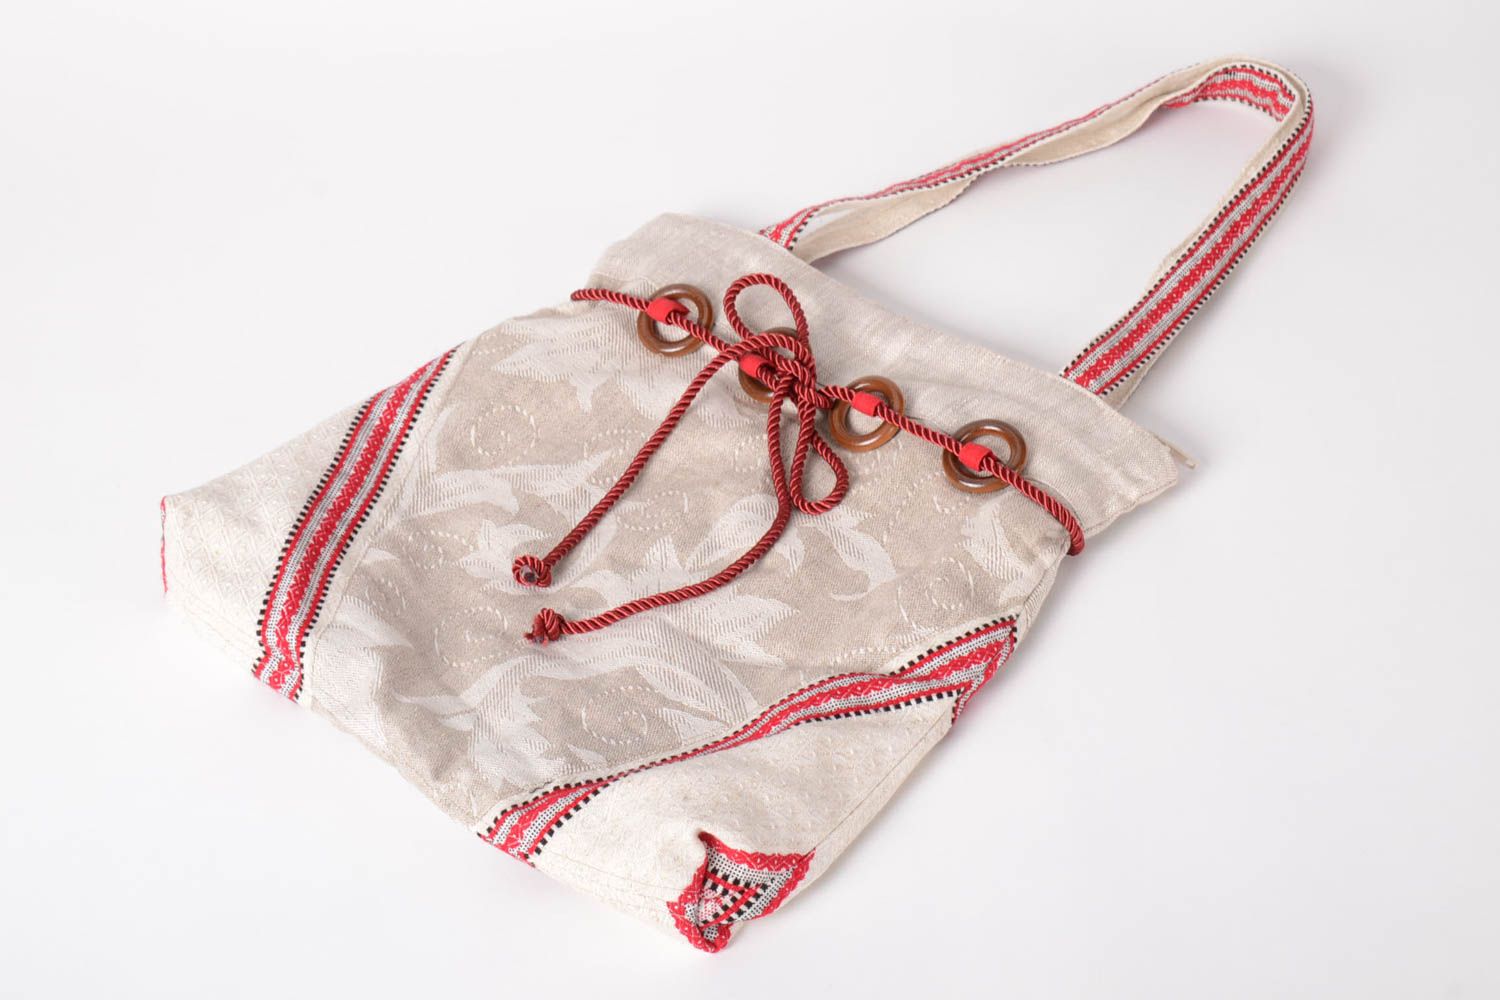 Handmade bag designer bag summer bag gift ideas bag for women fabric bag photo 2